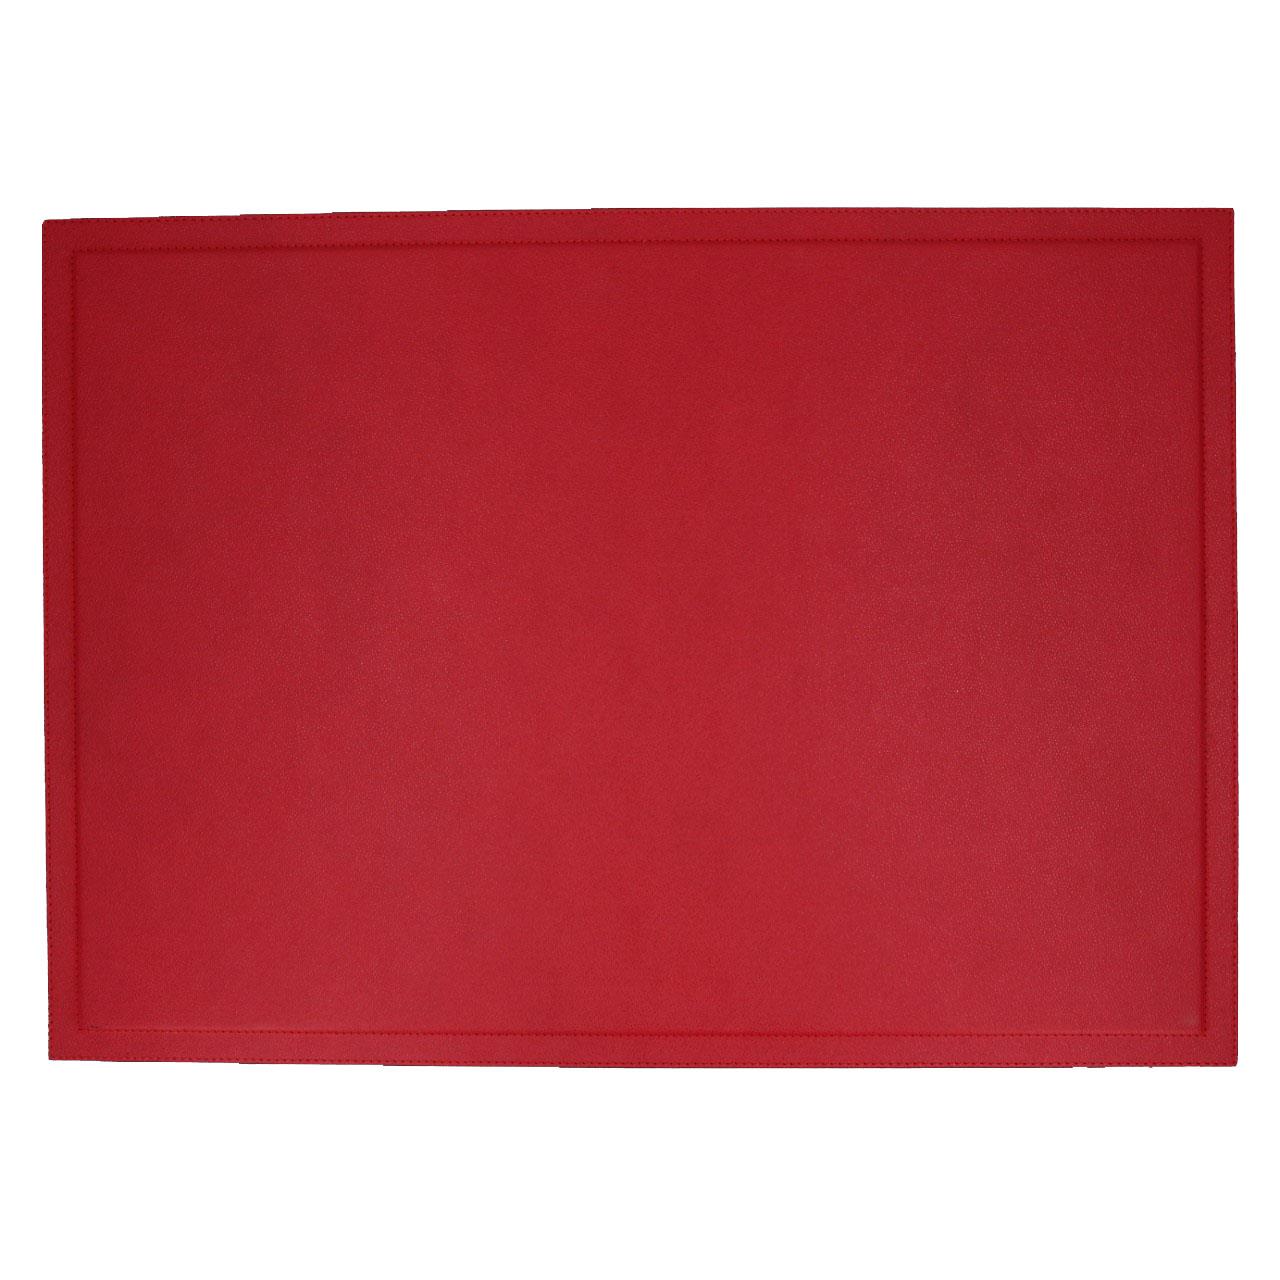 Giobagnara Phil Desk Blotter 50x70 Cm Golf Red Stitching Red